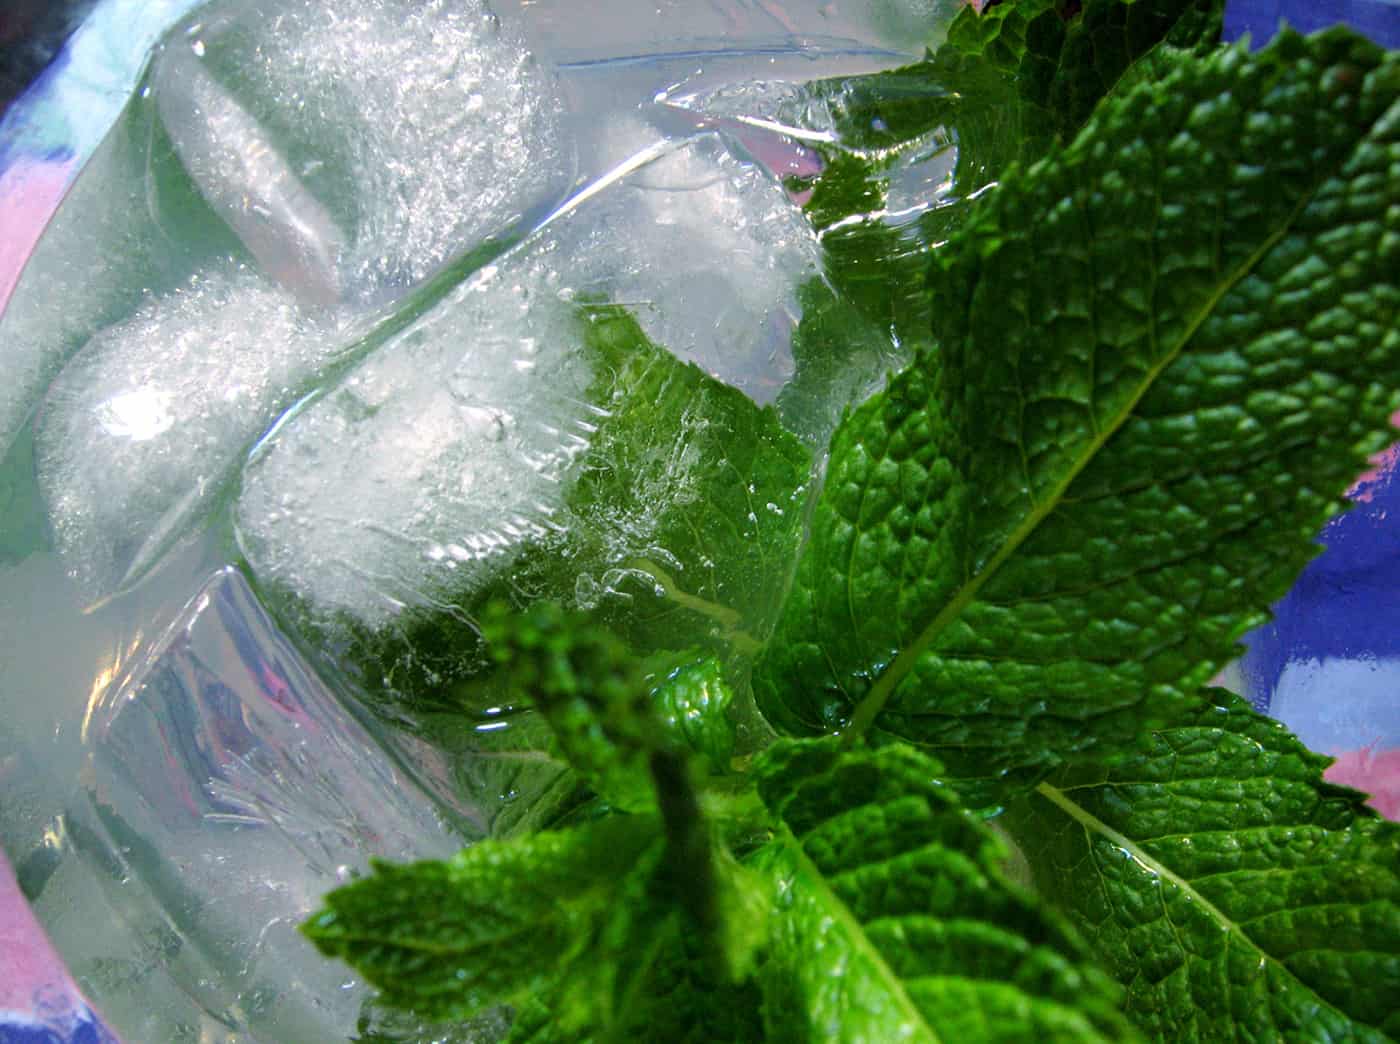 Herbal Drinks to Handle the Heat